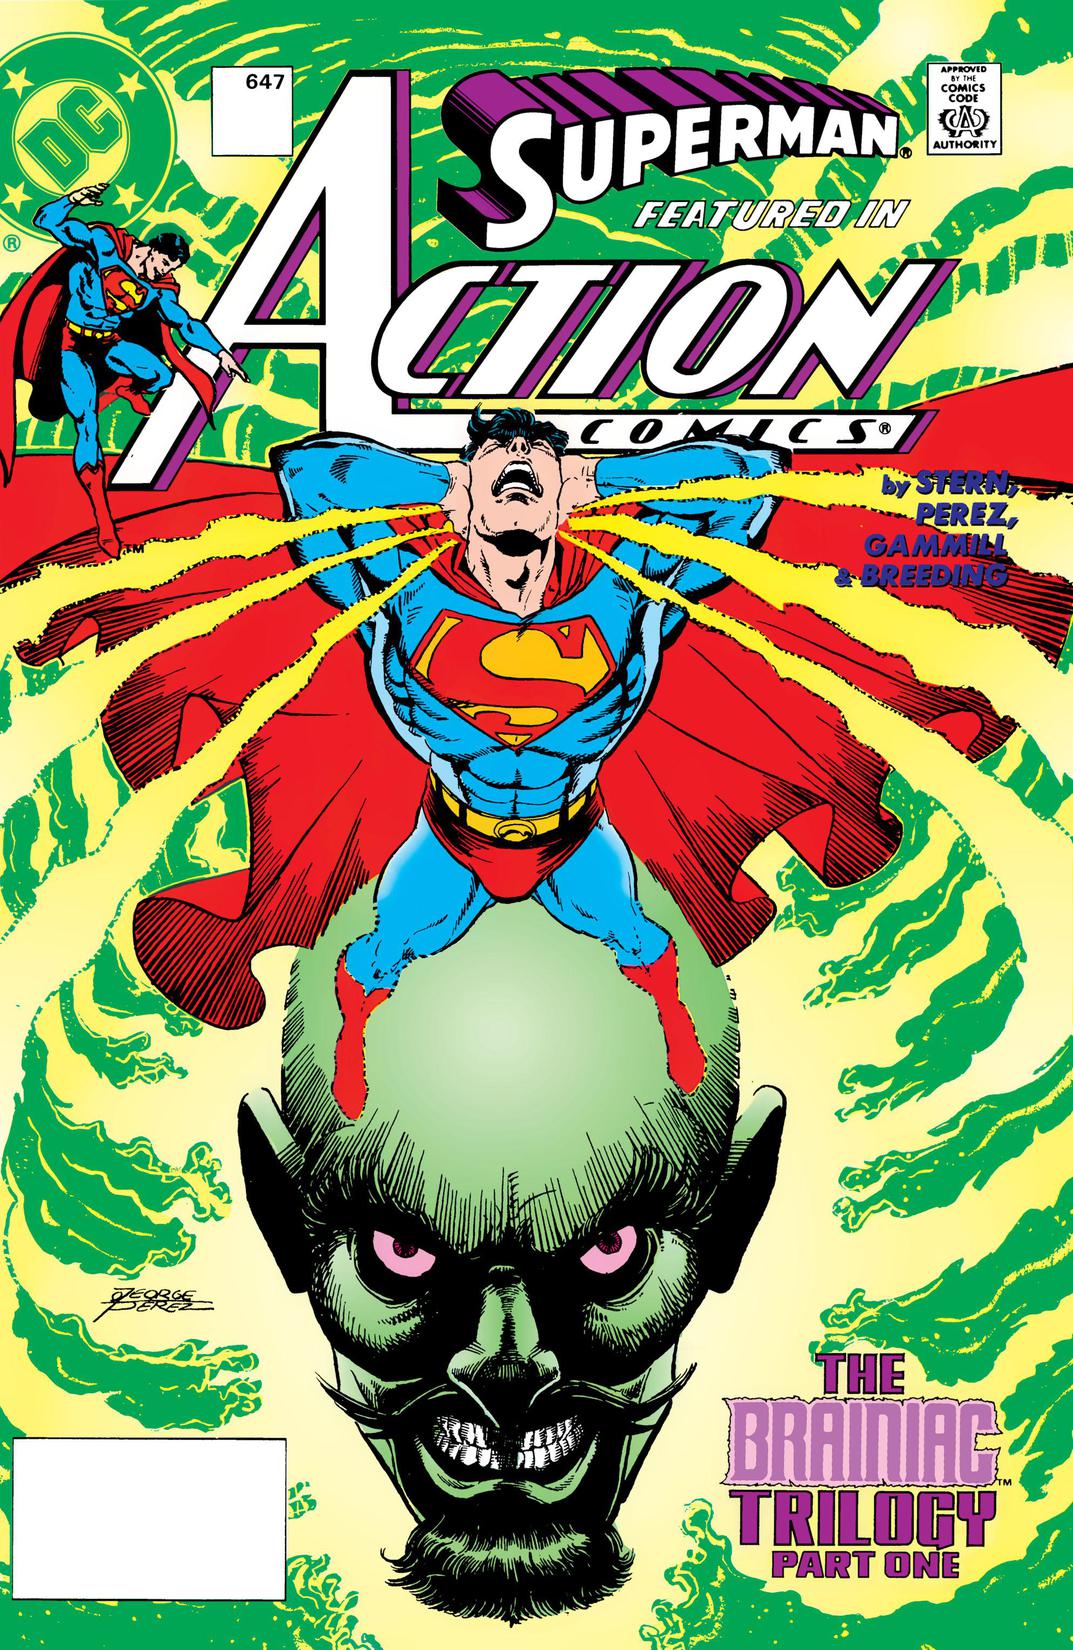 Action Comics (1938-2011) #647 preview images